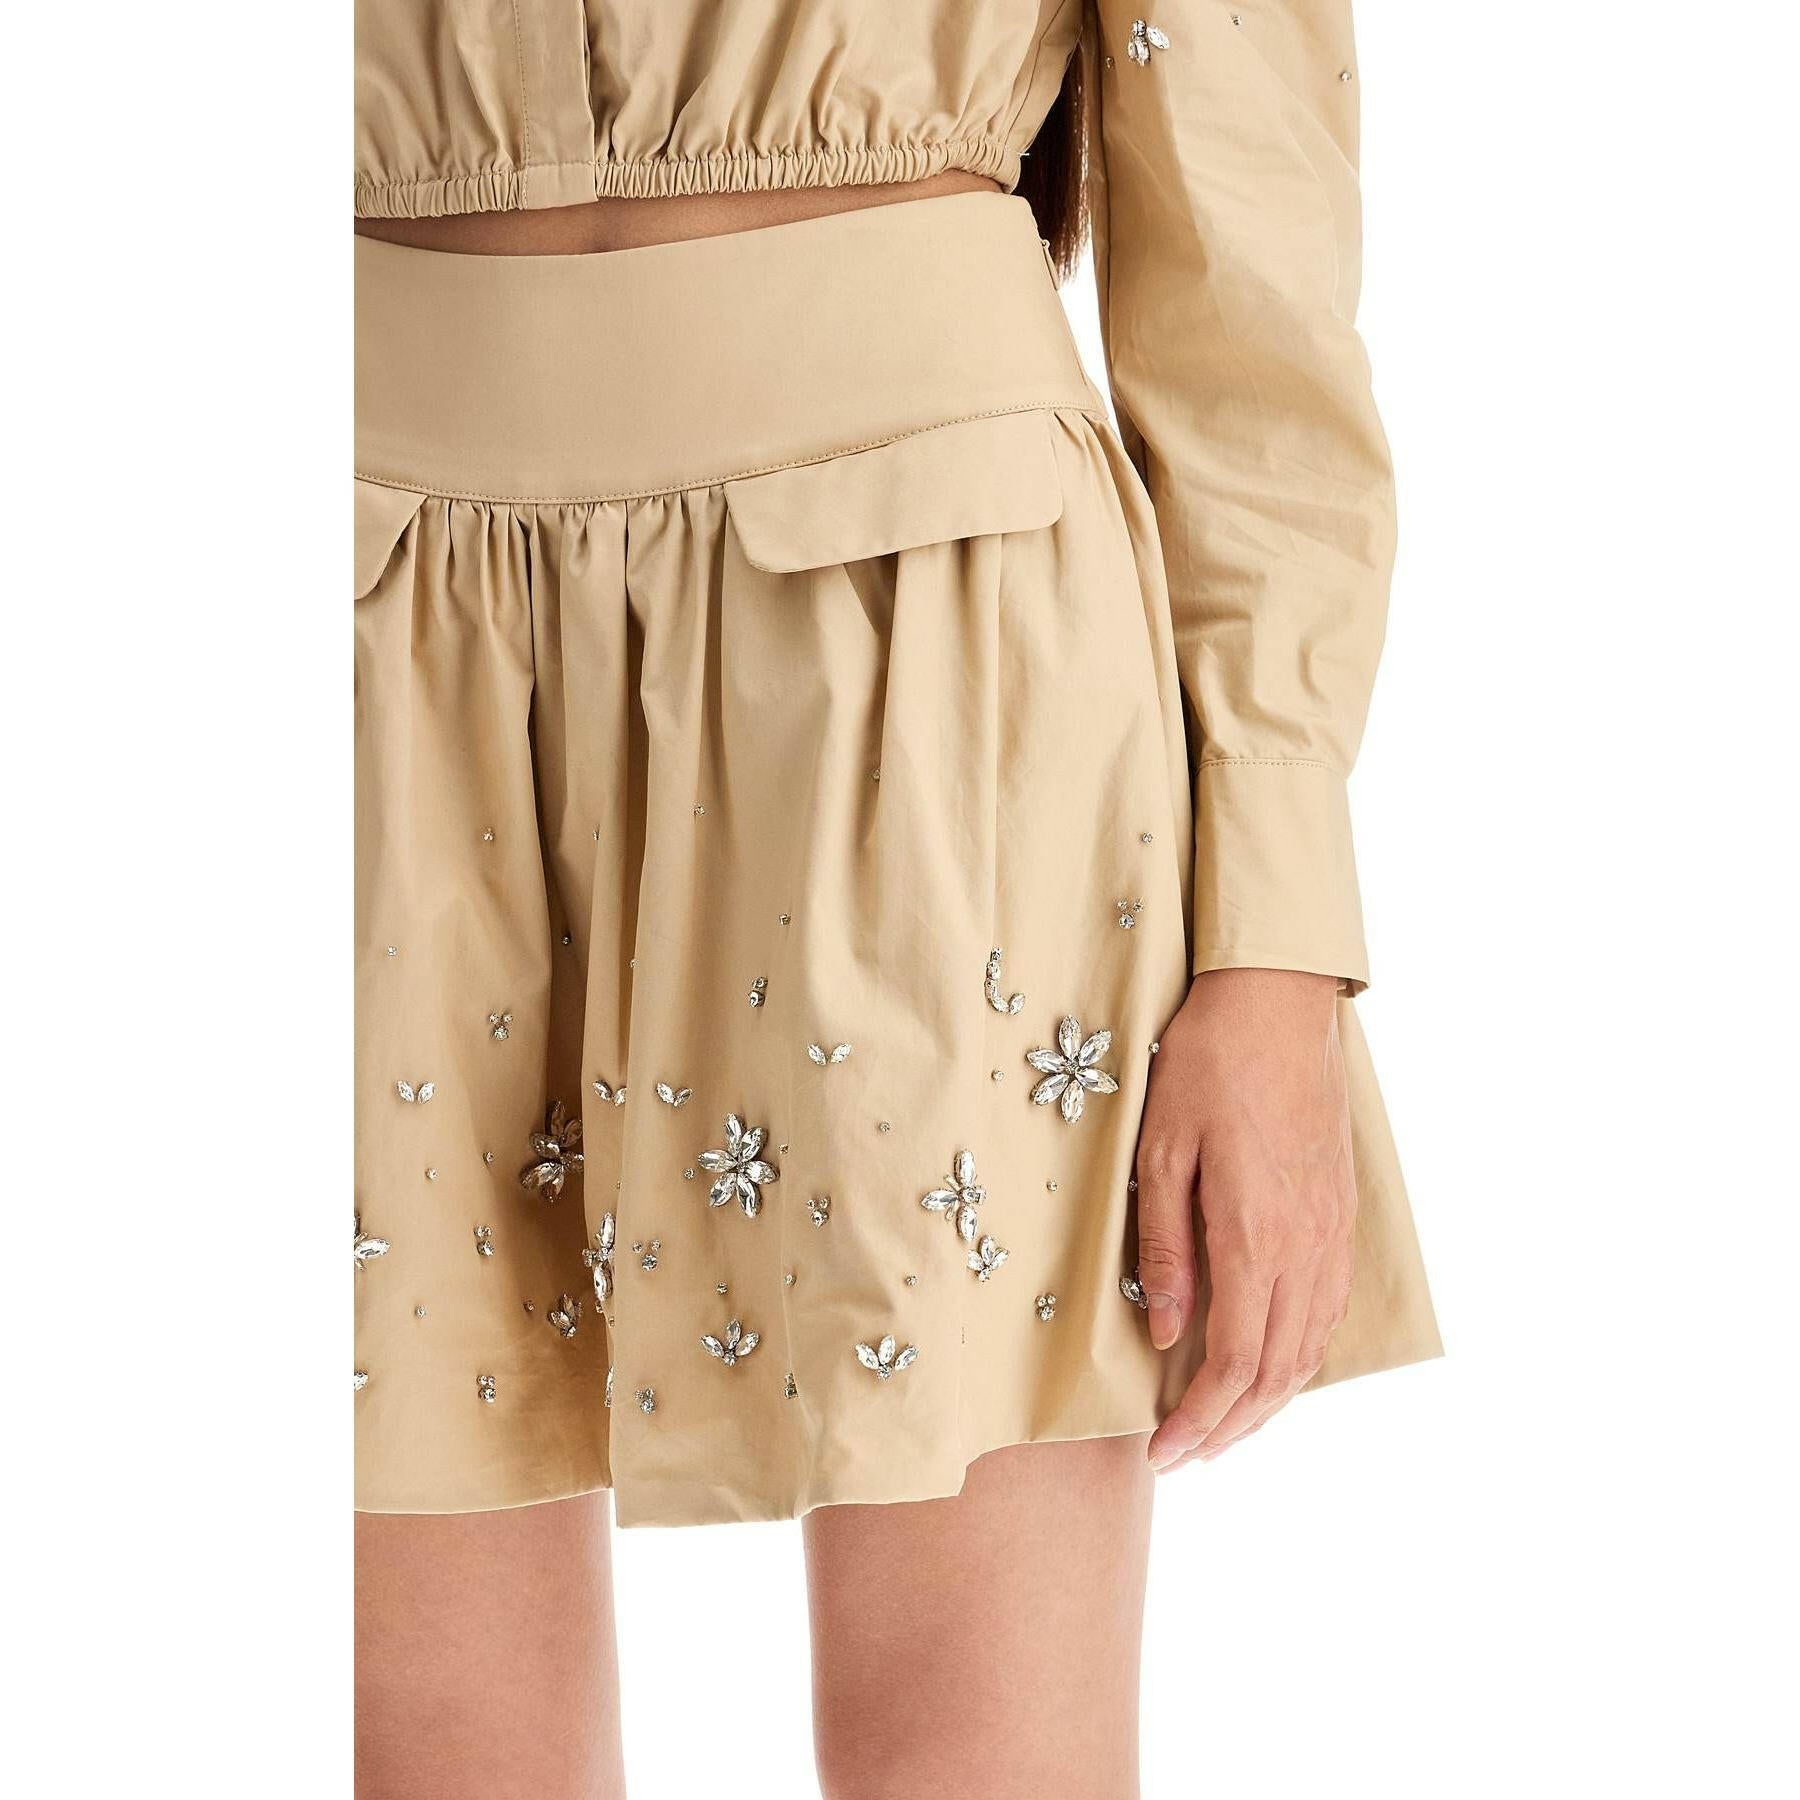 Cotton Embellished Mini Skirt.